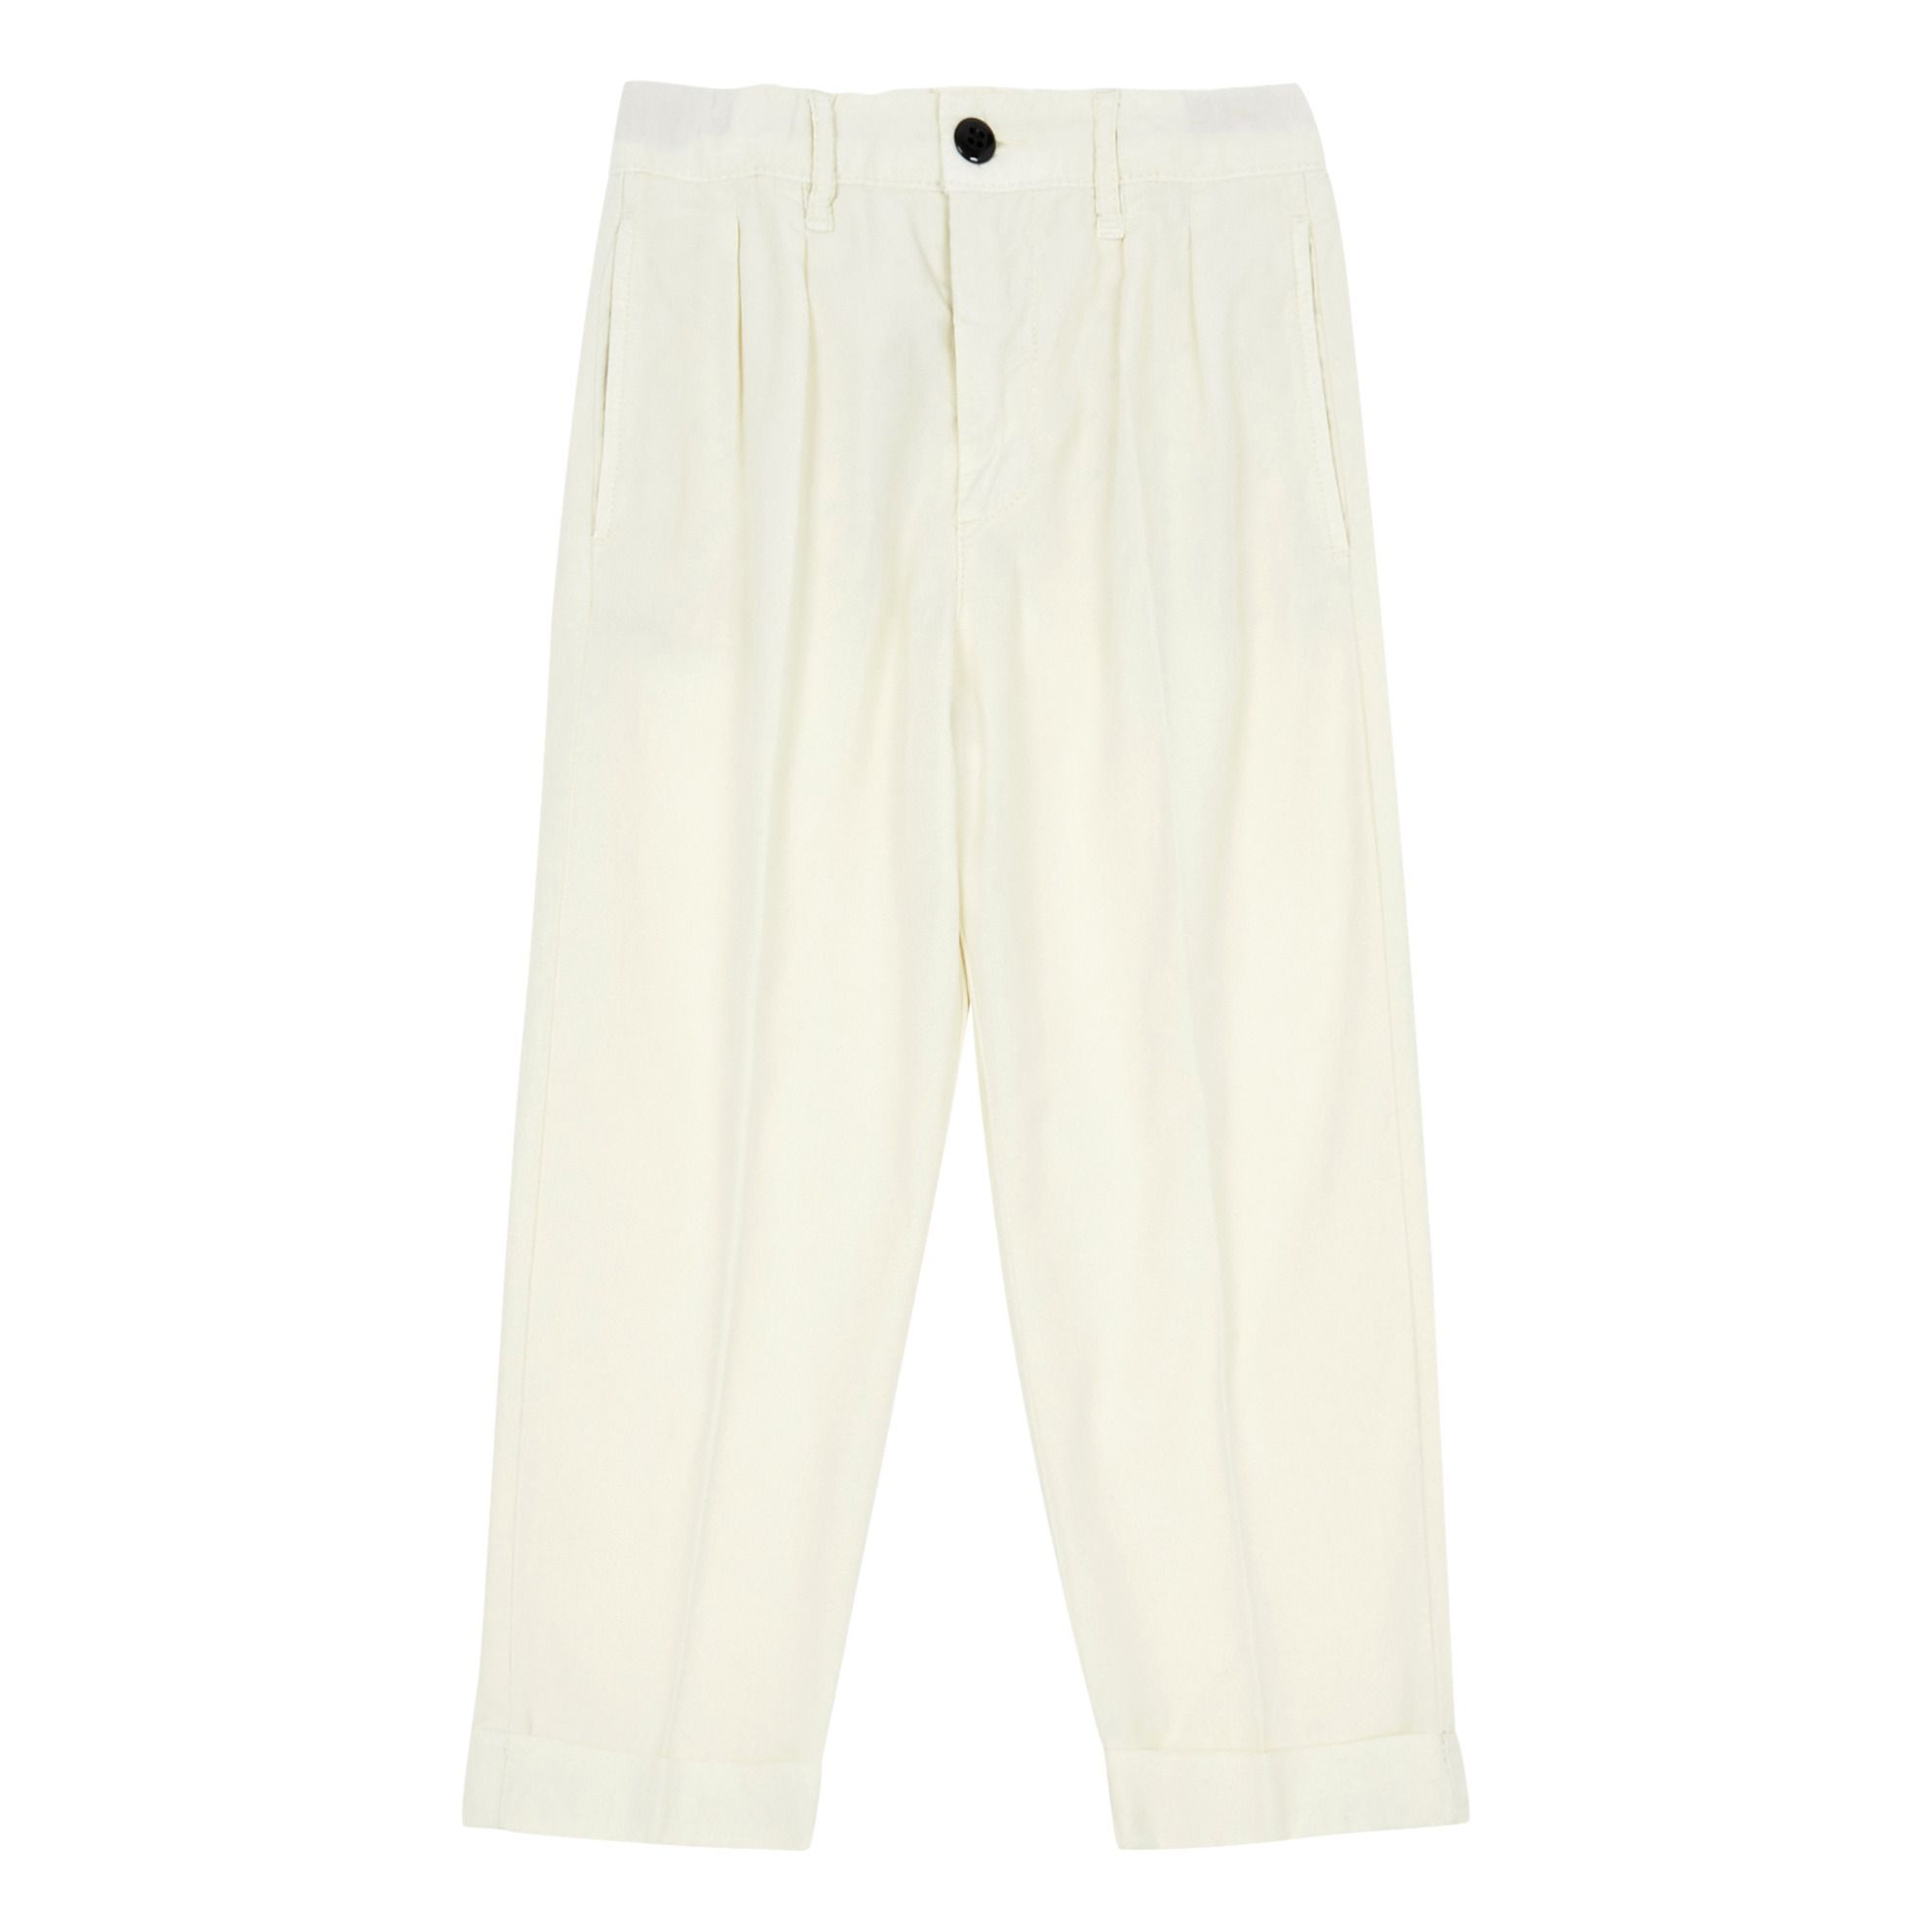 Bellerose - Pantalon Peaces - Fille - Blanc